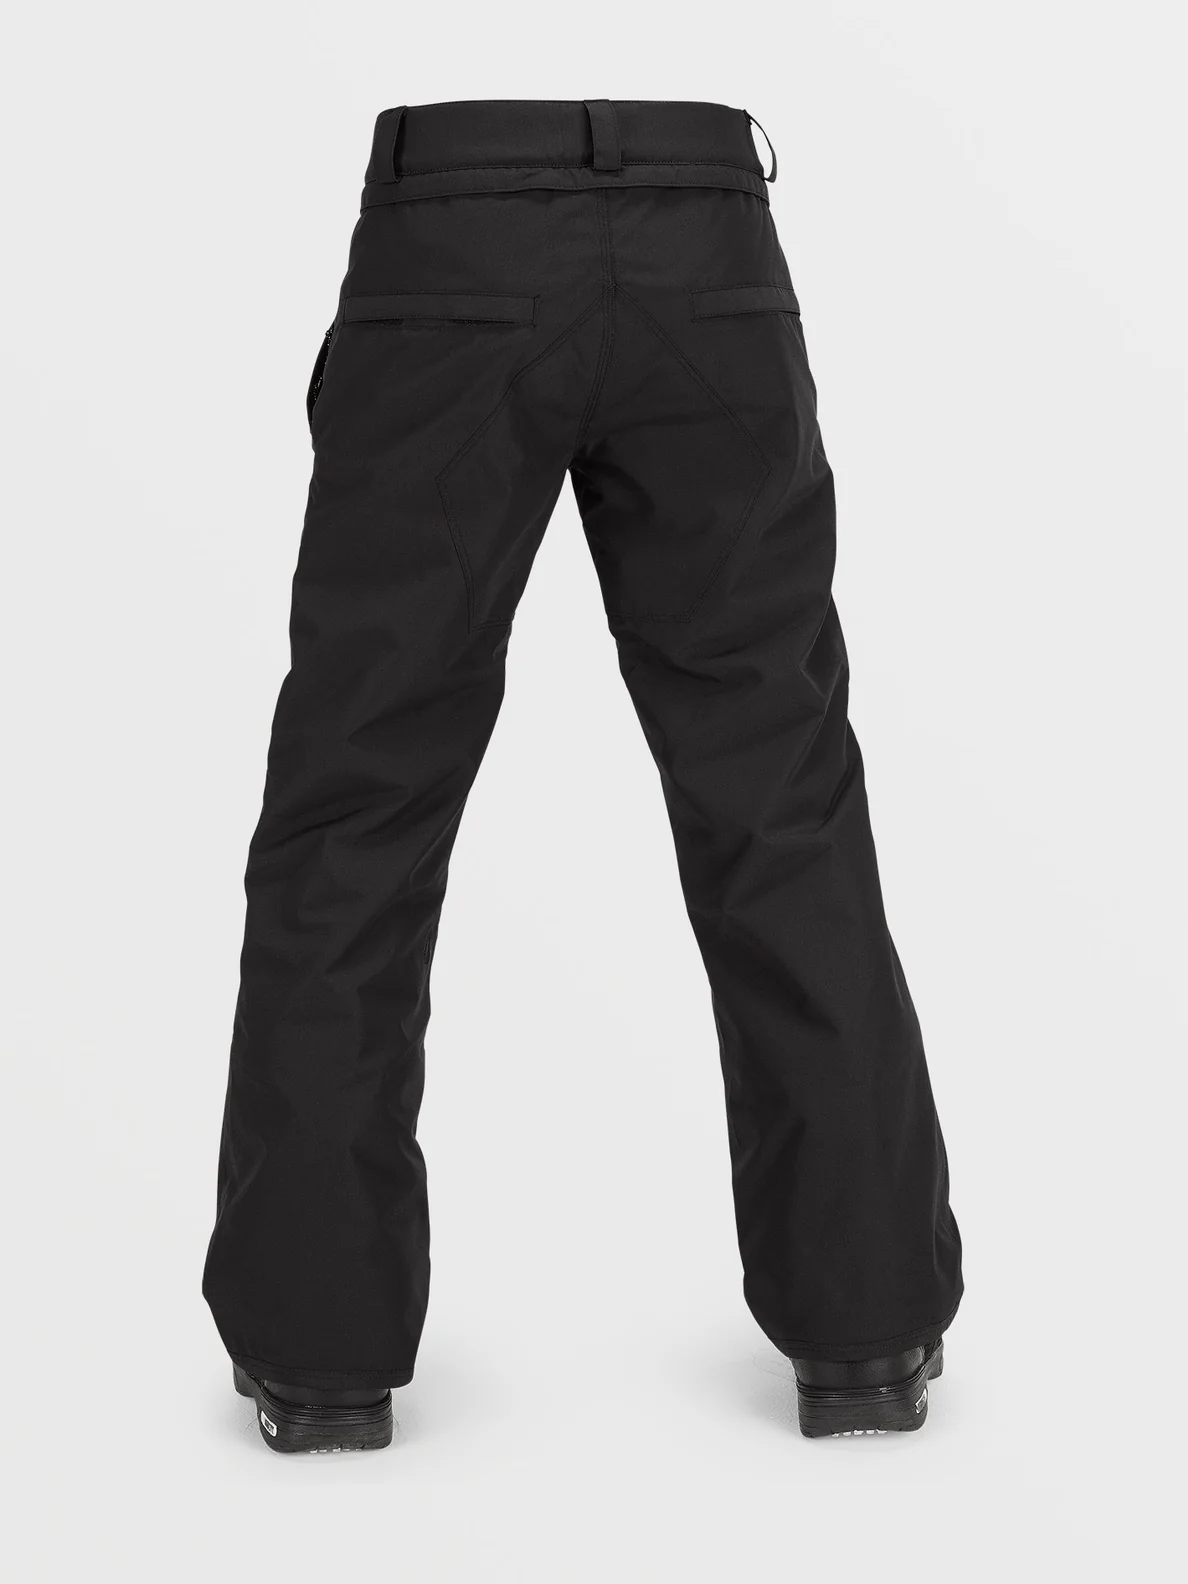 Volcom Freakin Chino Youth Insulated Pant - Black